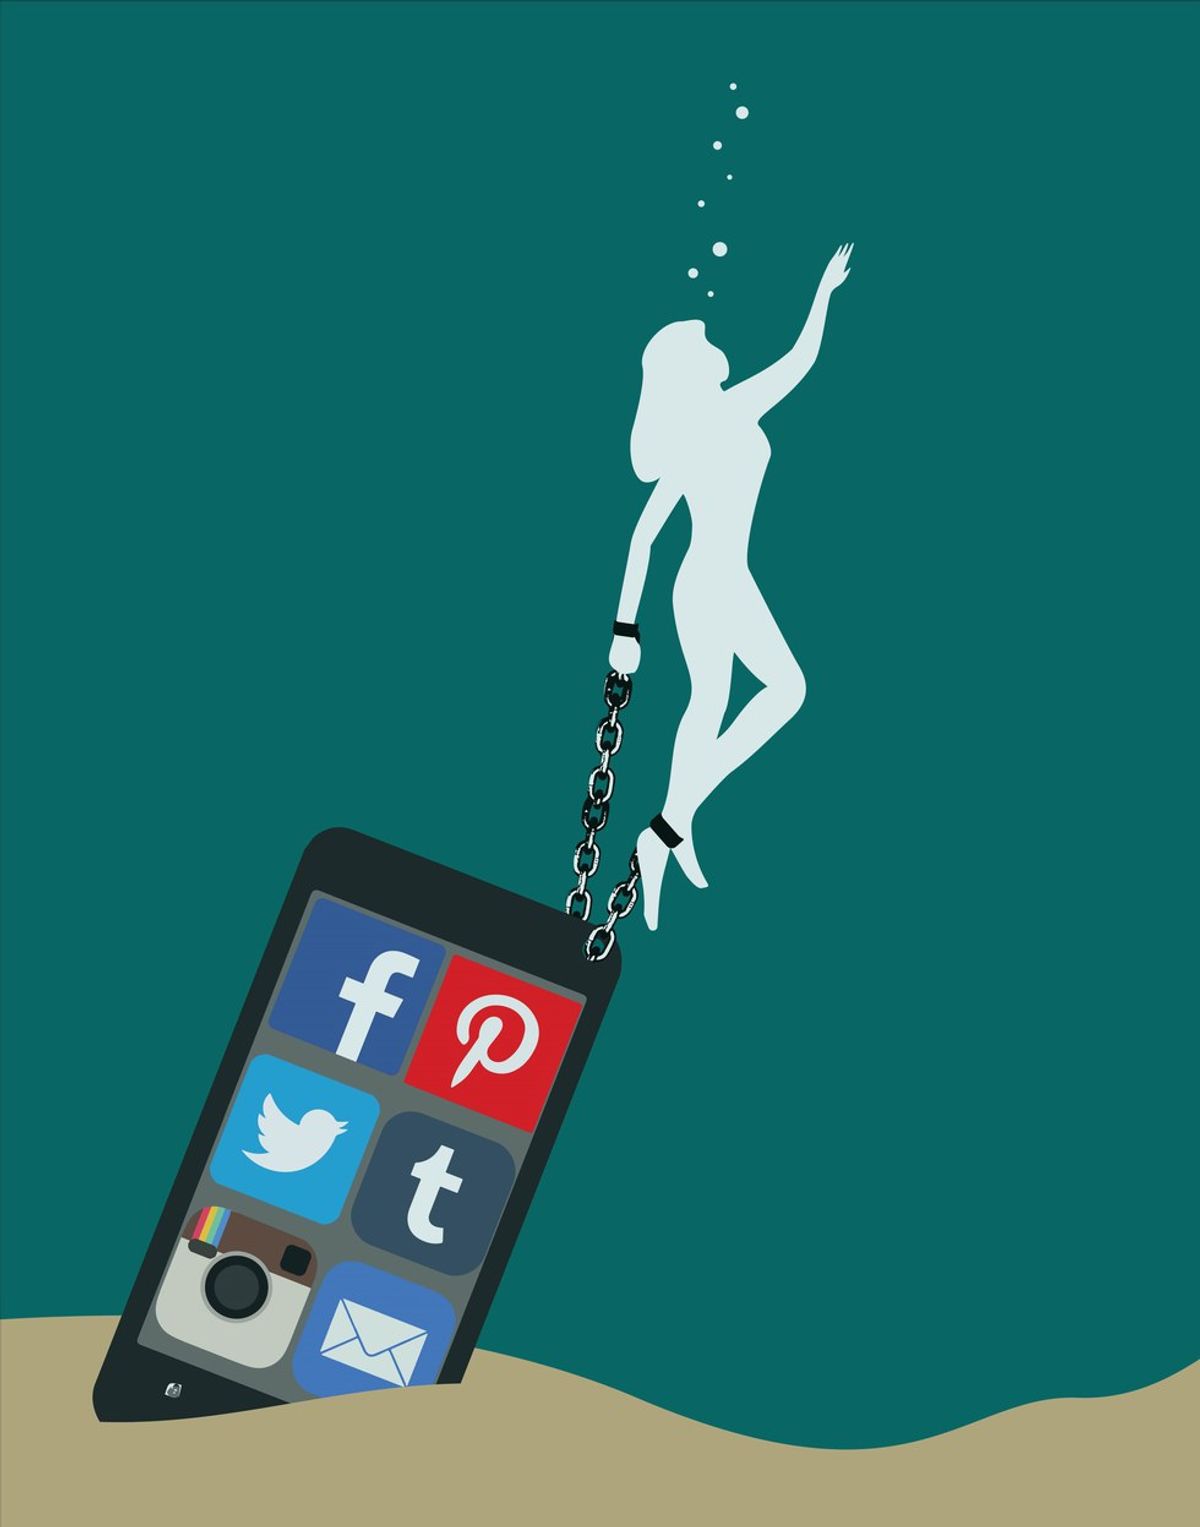 Social Media Depression: An Addiction As Real As Any